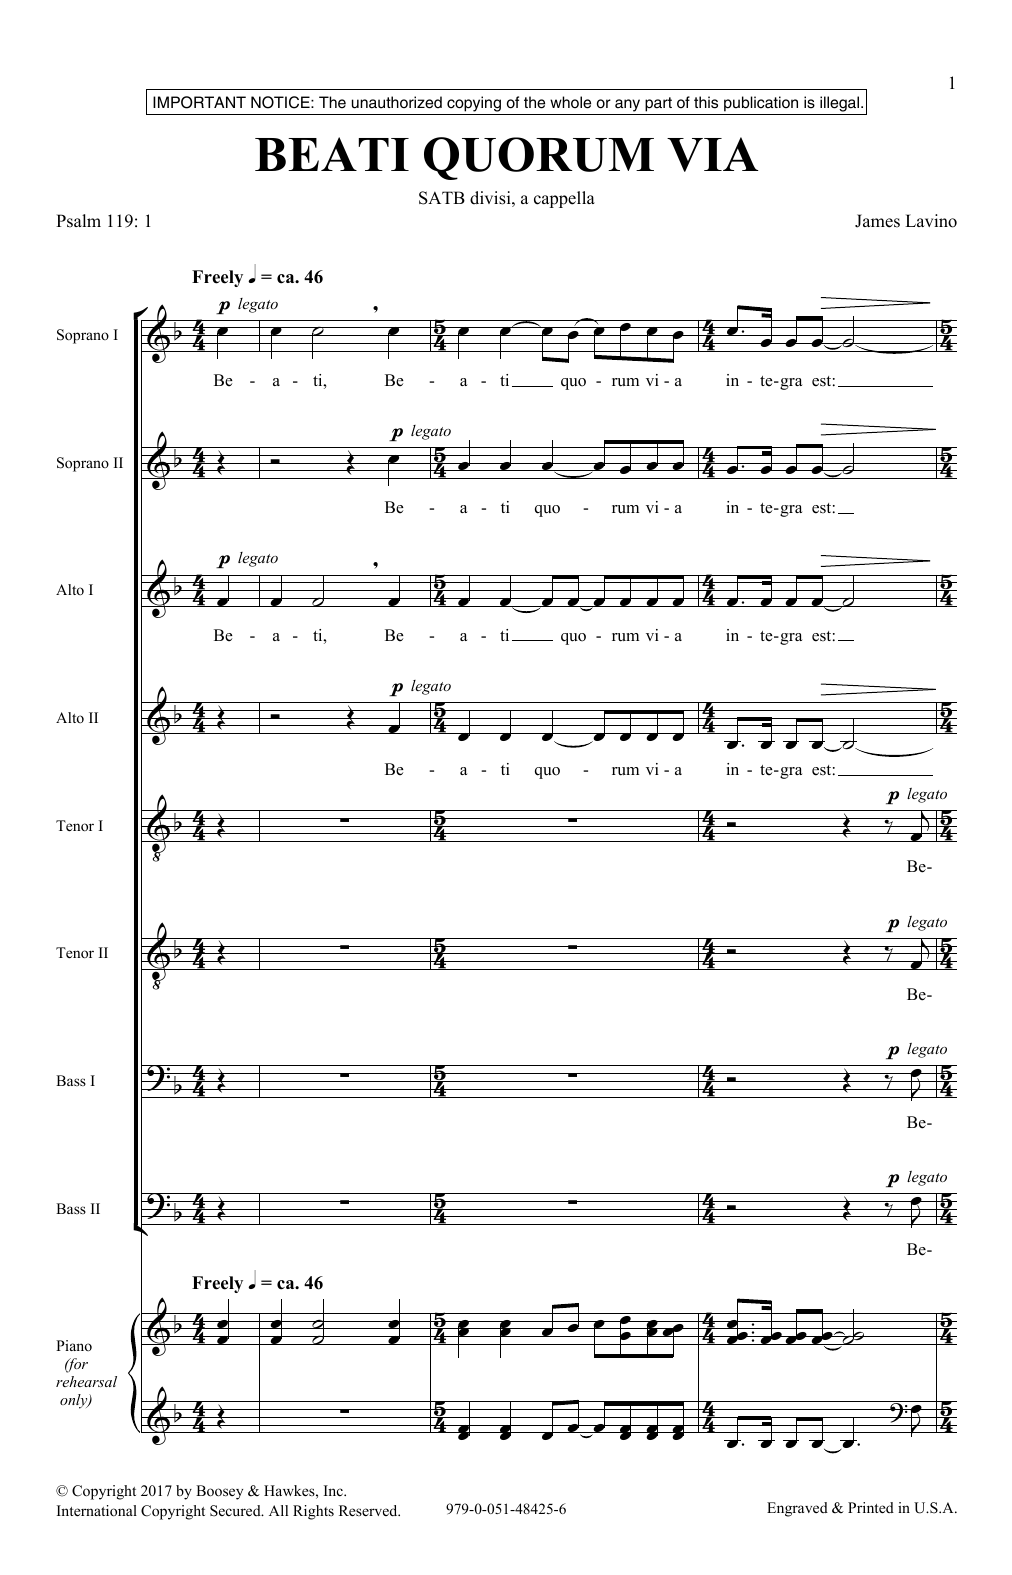 James Lavino Beati Quorum Via Sheet Music Notes & Chords for SATB - Download or Print PDF